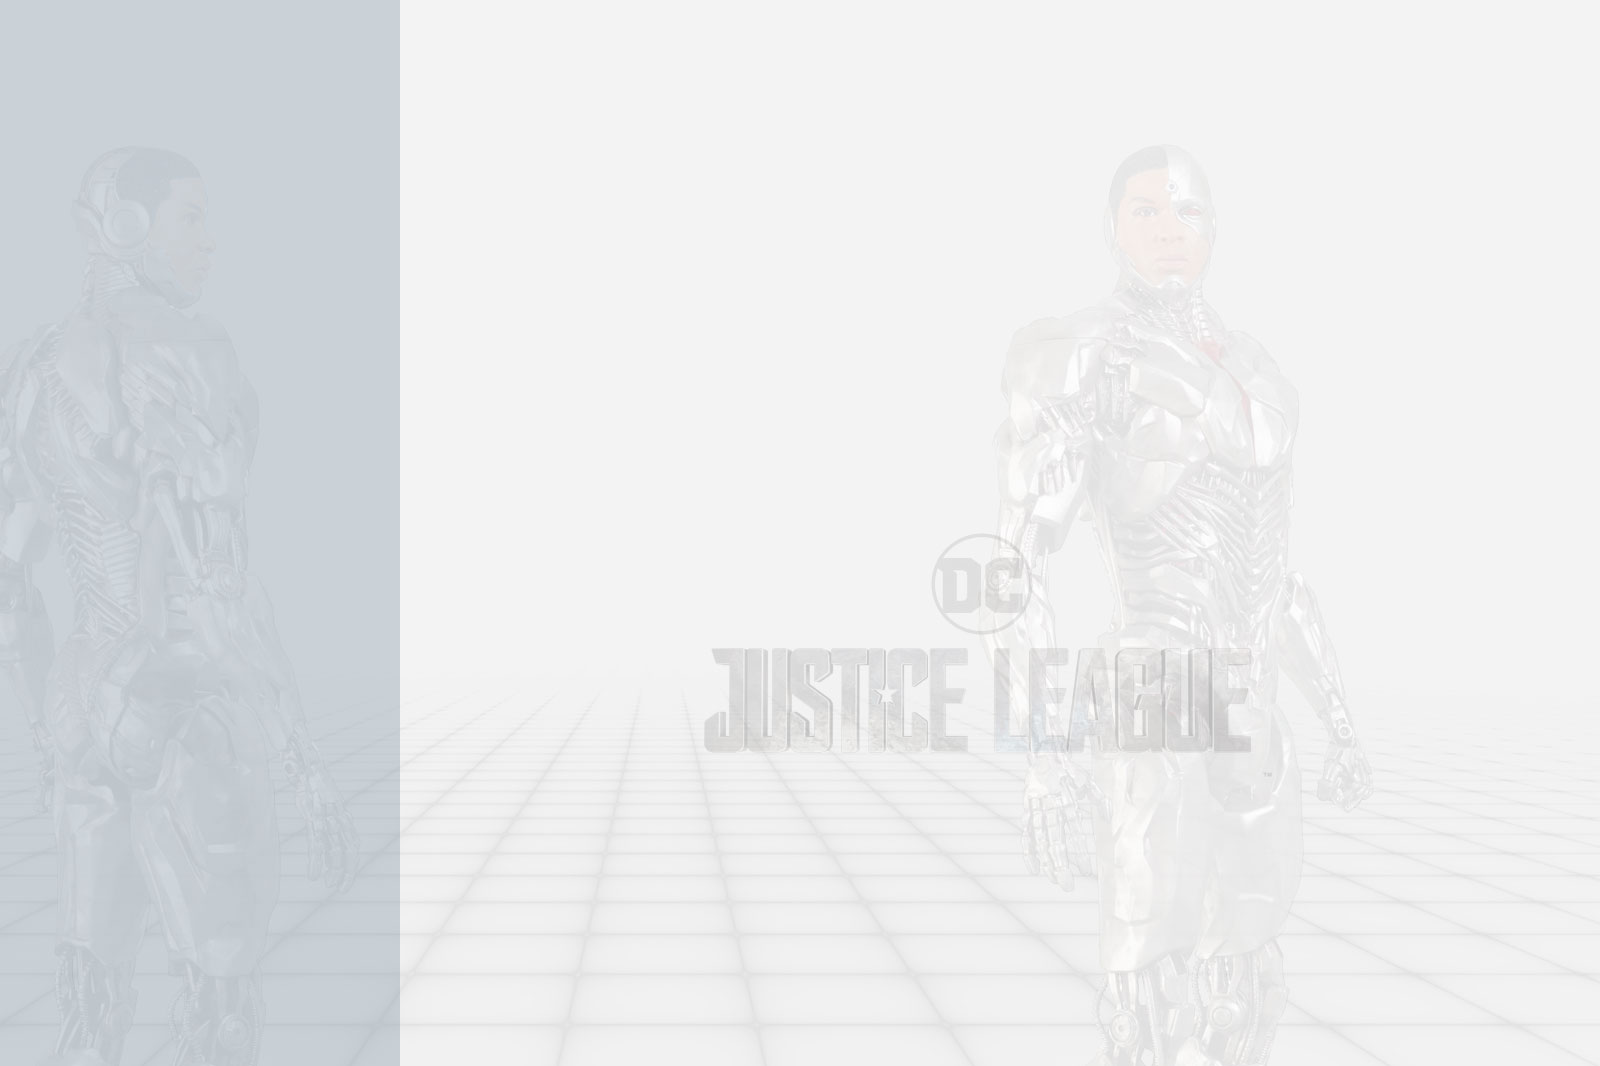 Justice League – Cyborg